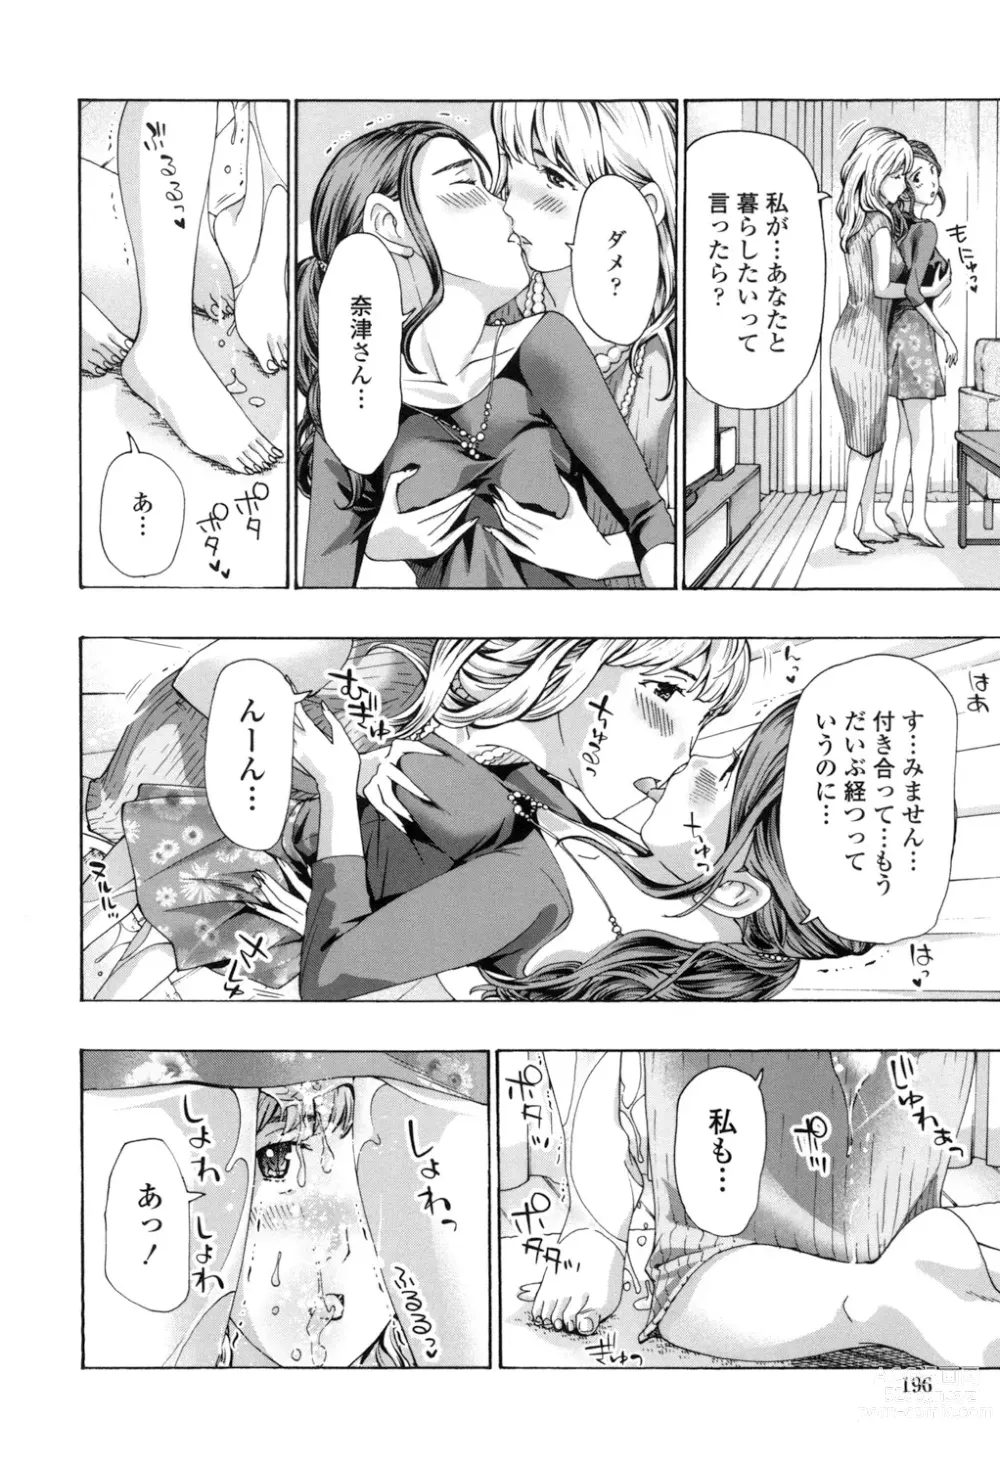 Page 194 of manga Girls Girls